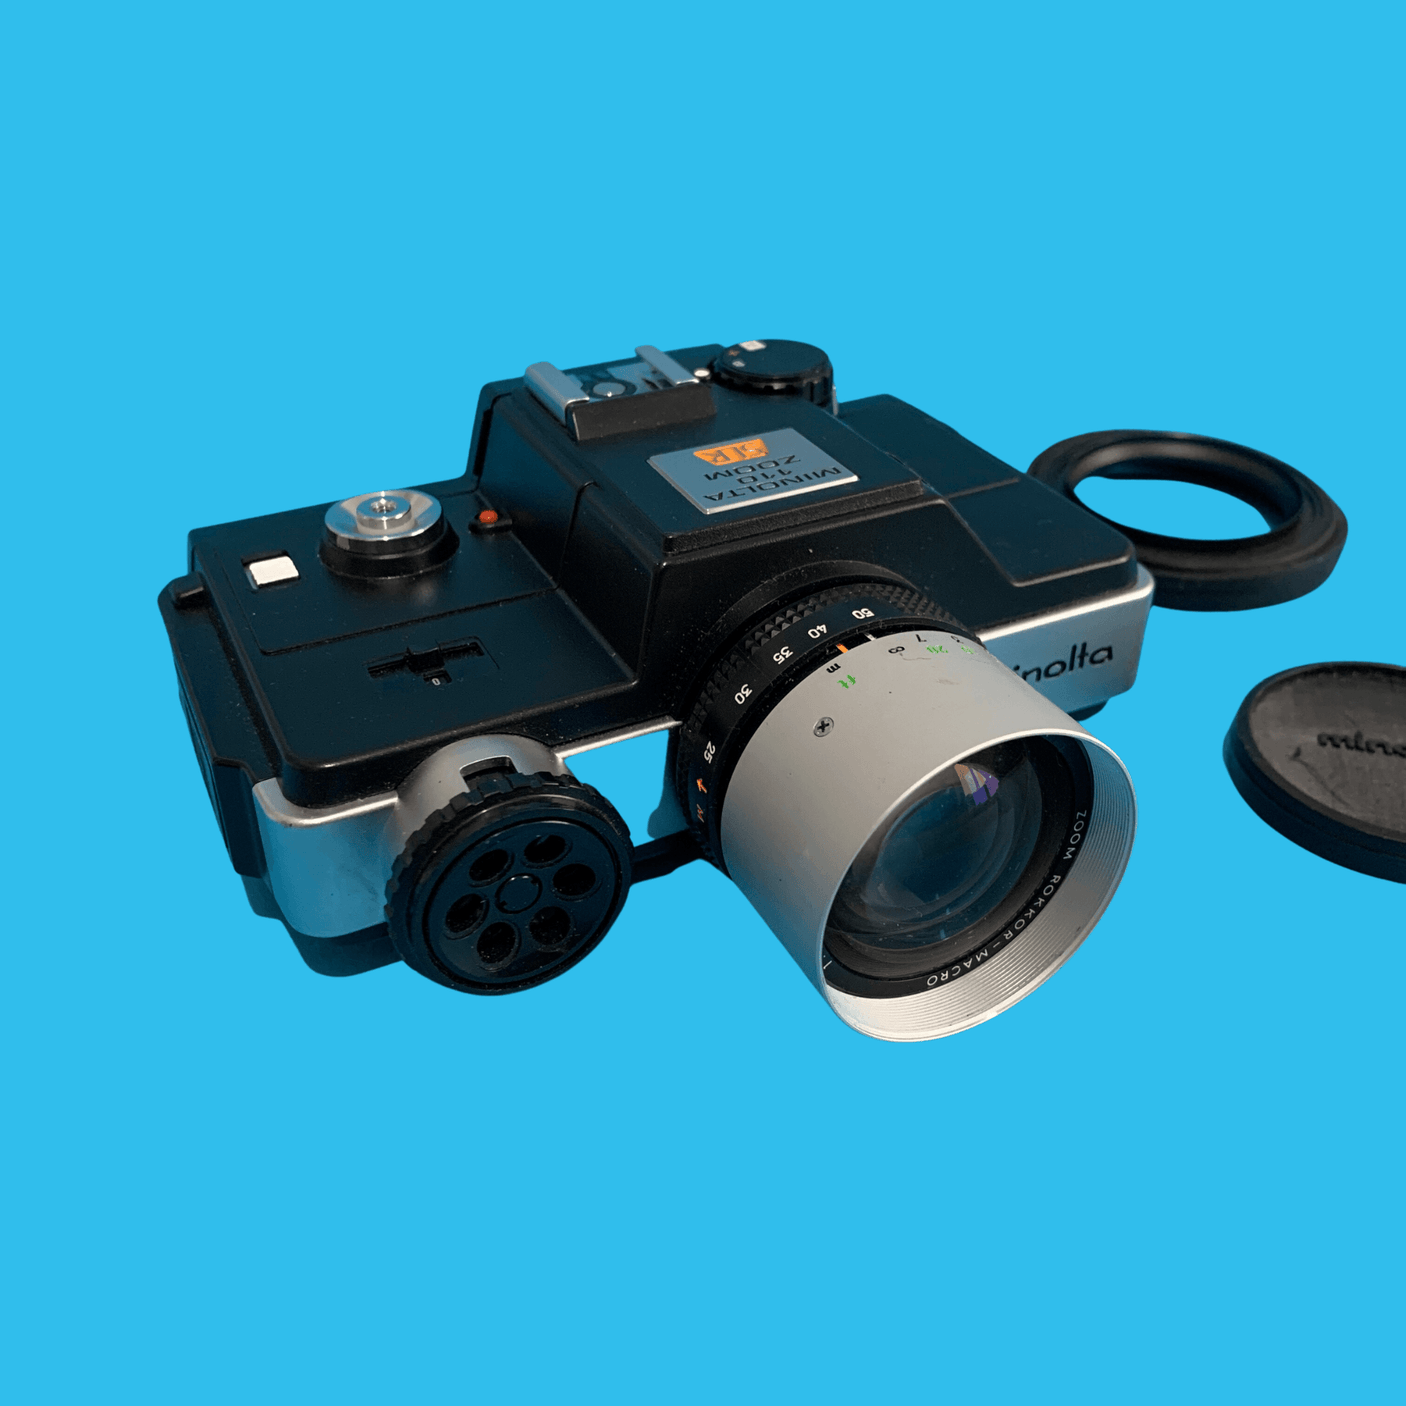 Minolta Zoom 110 Film Compact SLR Camera